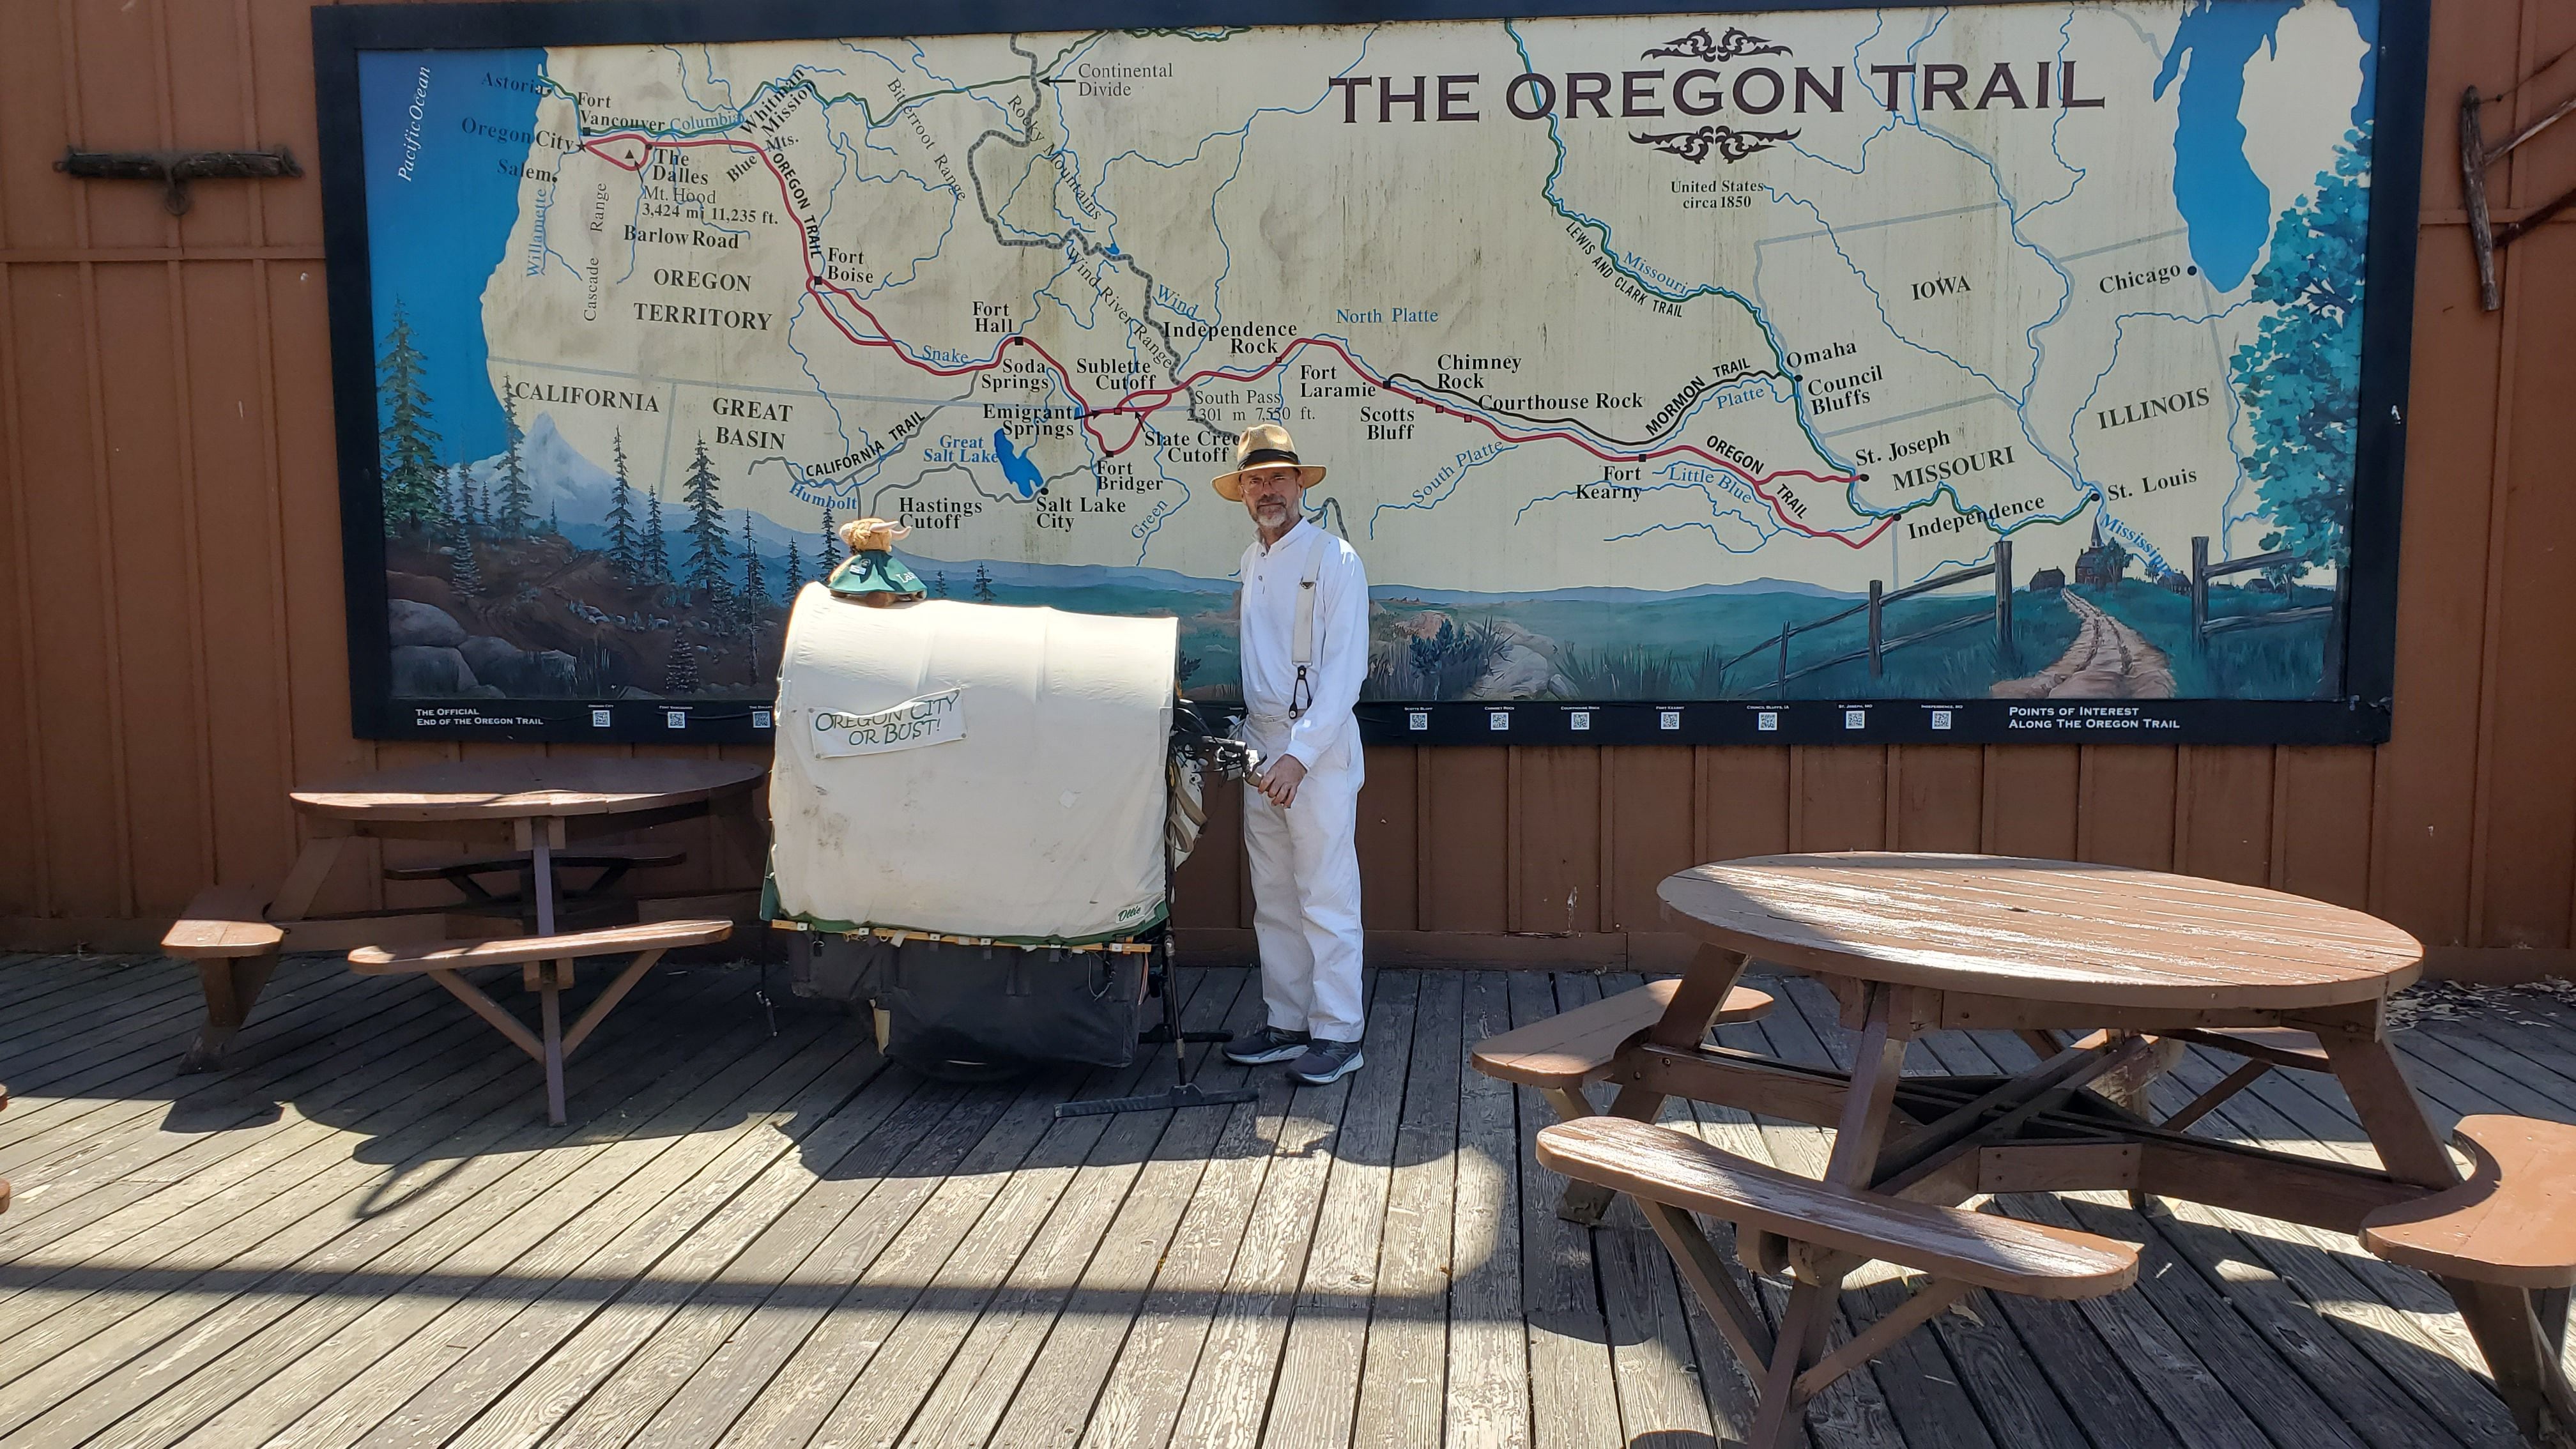 Oregonian hikes entire Oregon Trail, pushing covered wagon - OPB